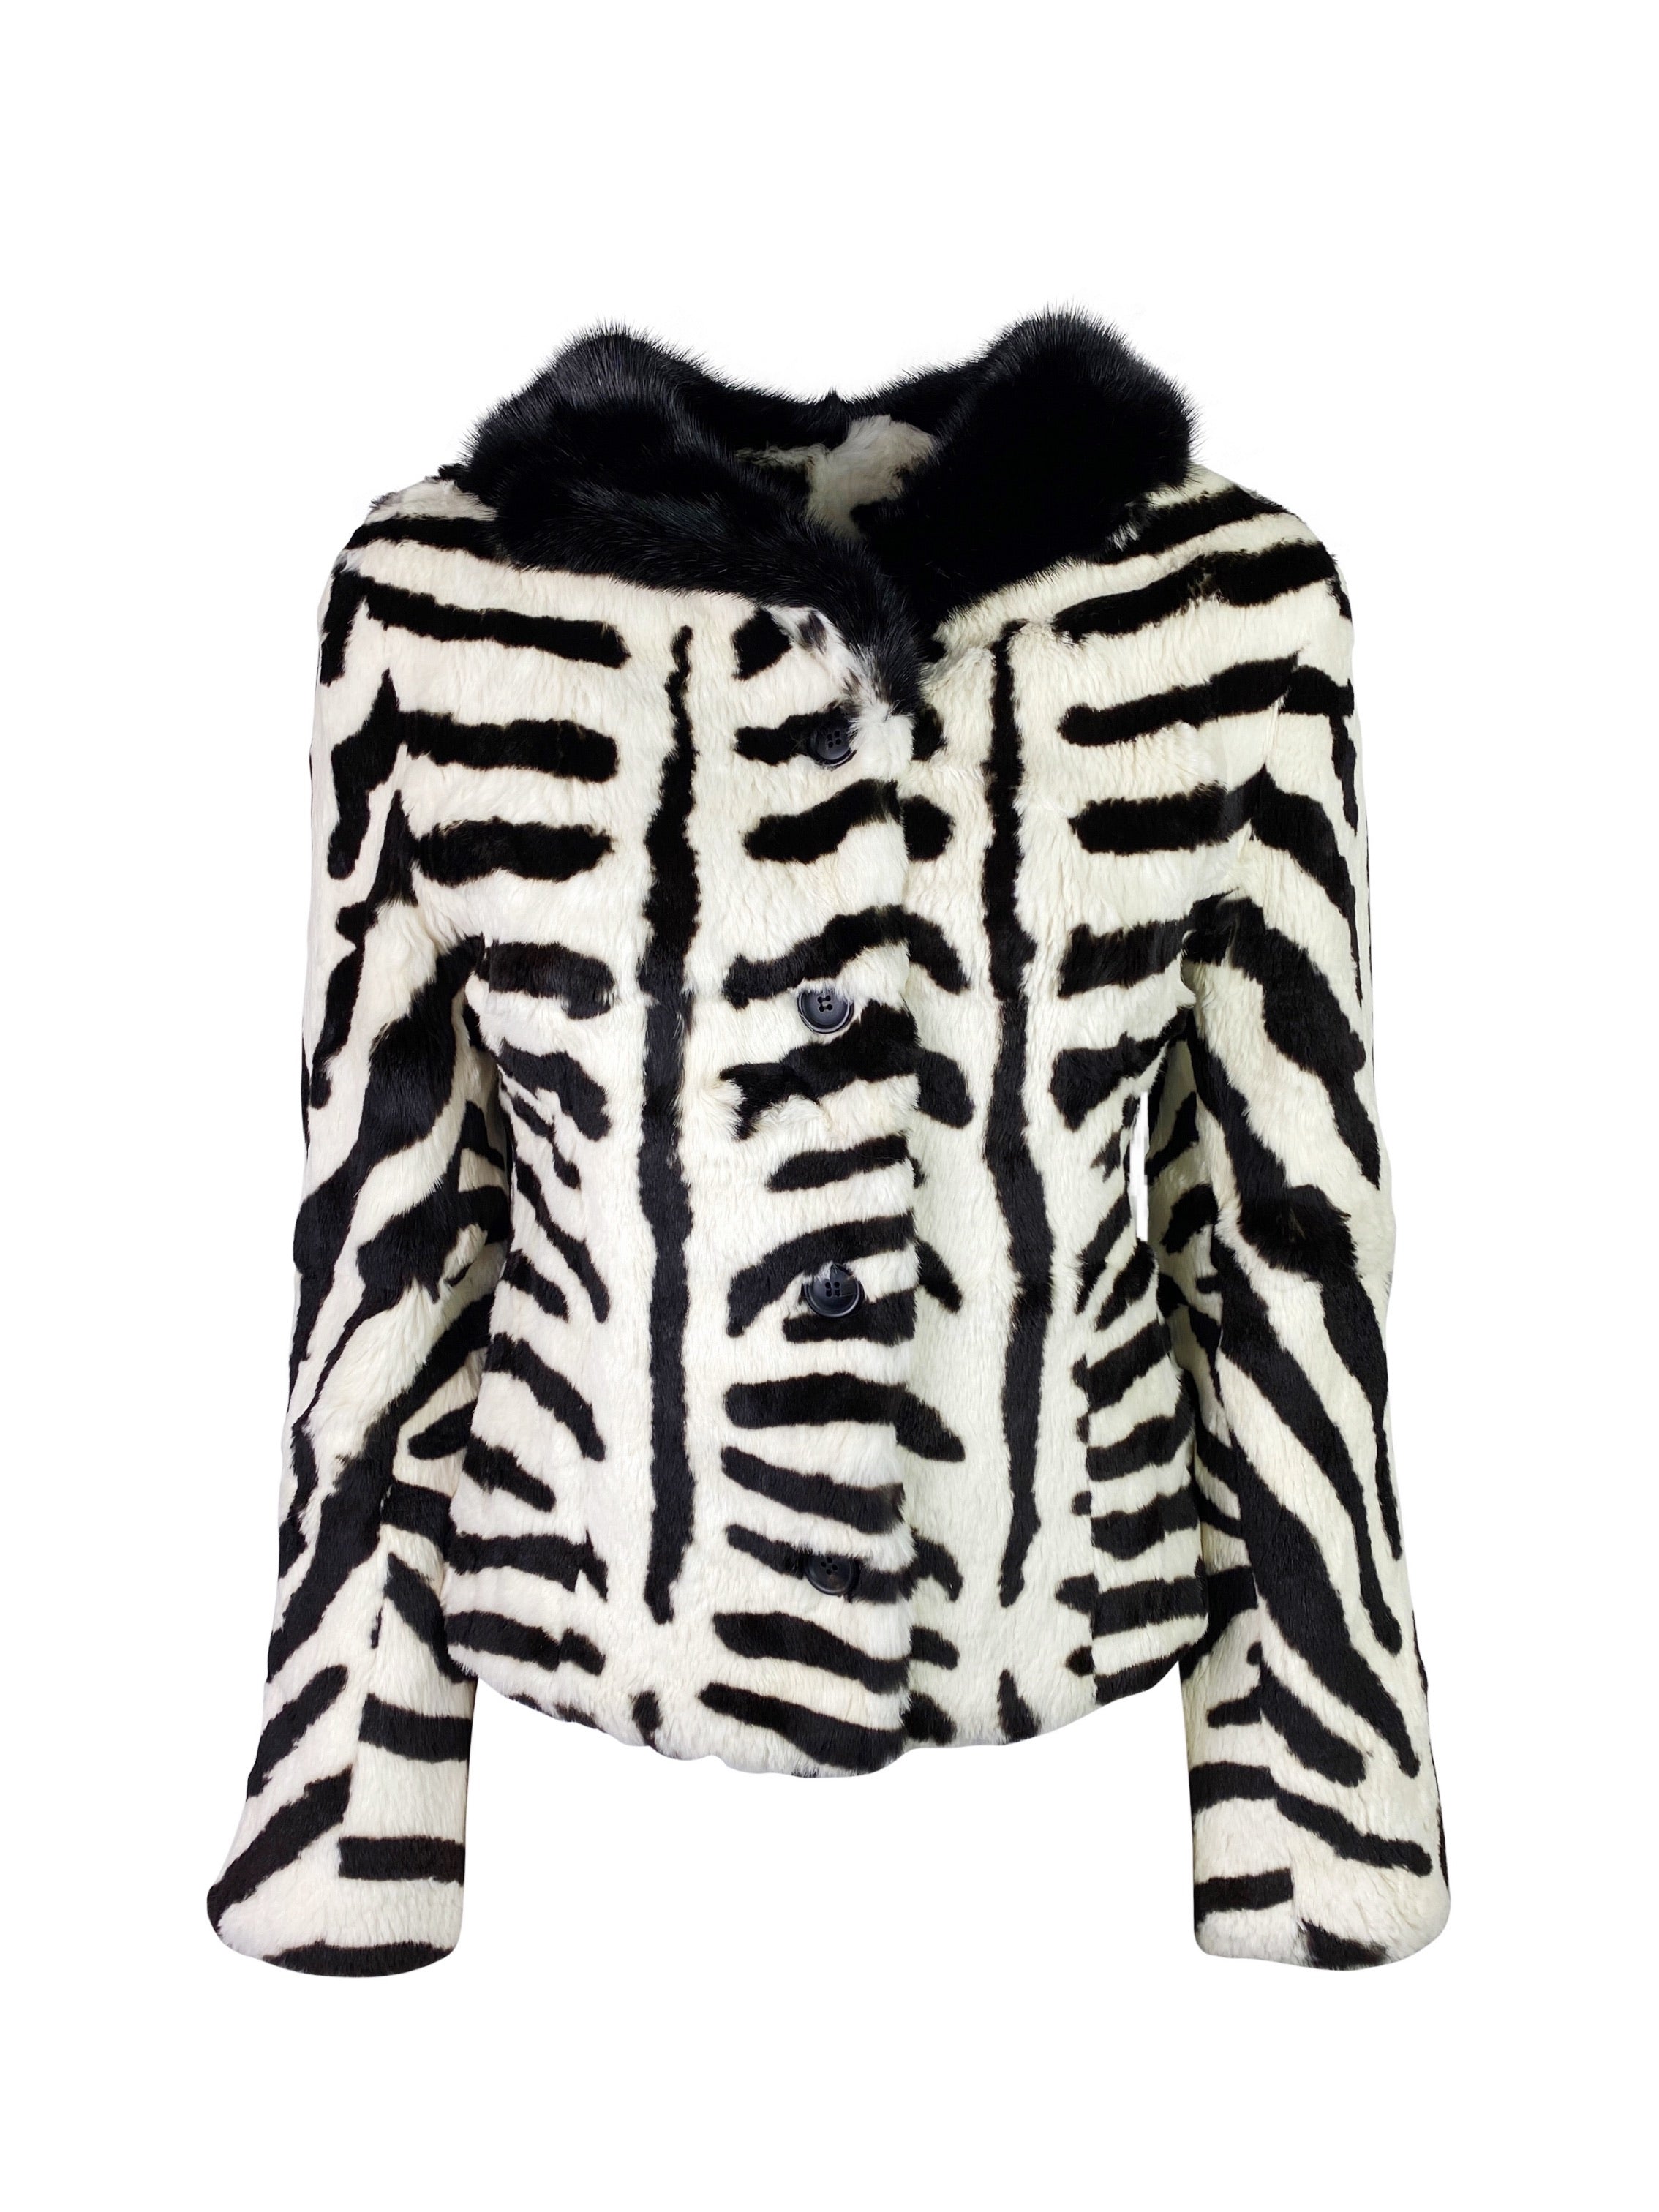 Dolce & Gabbana Fall 1999 Zebra Print Fur Jacket